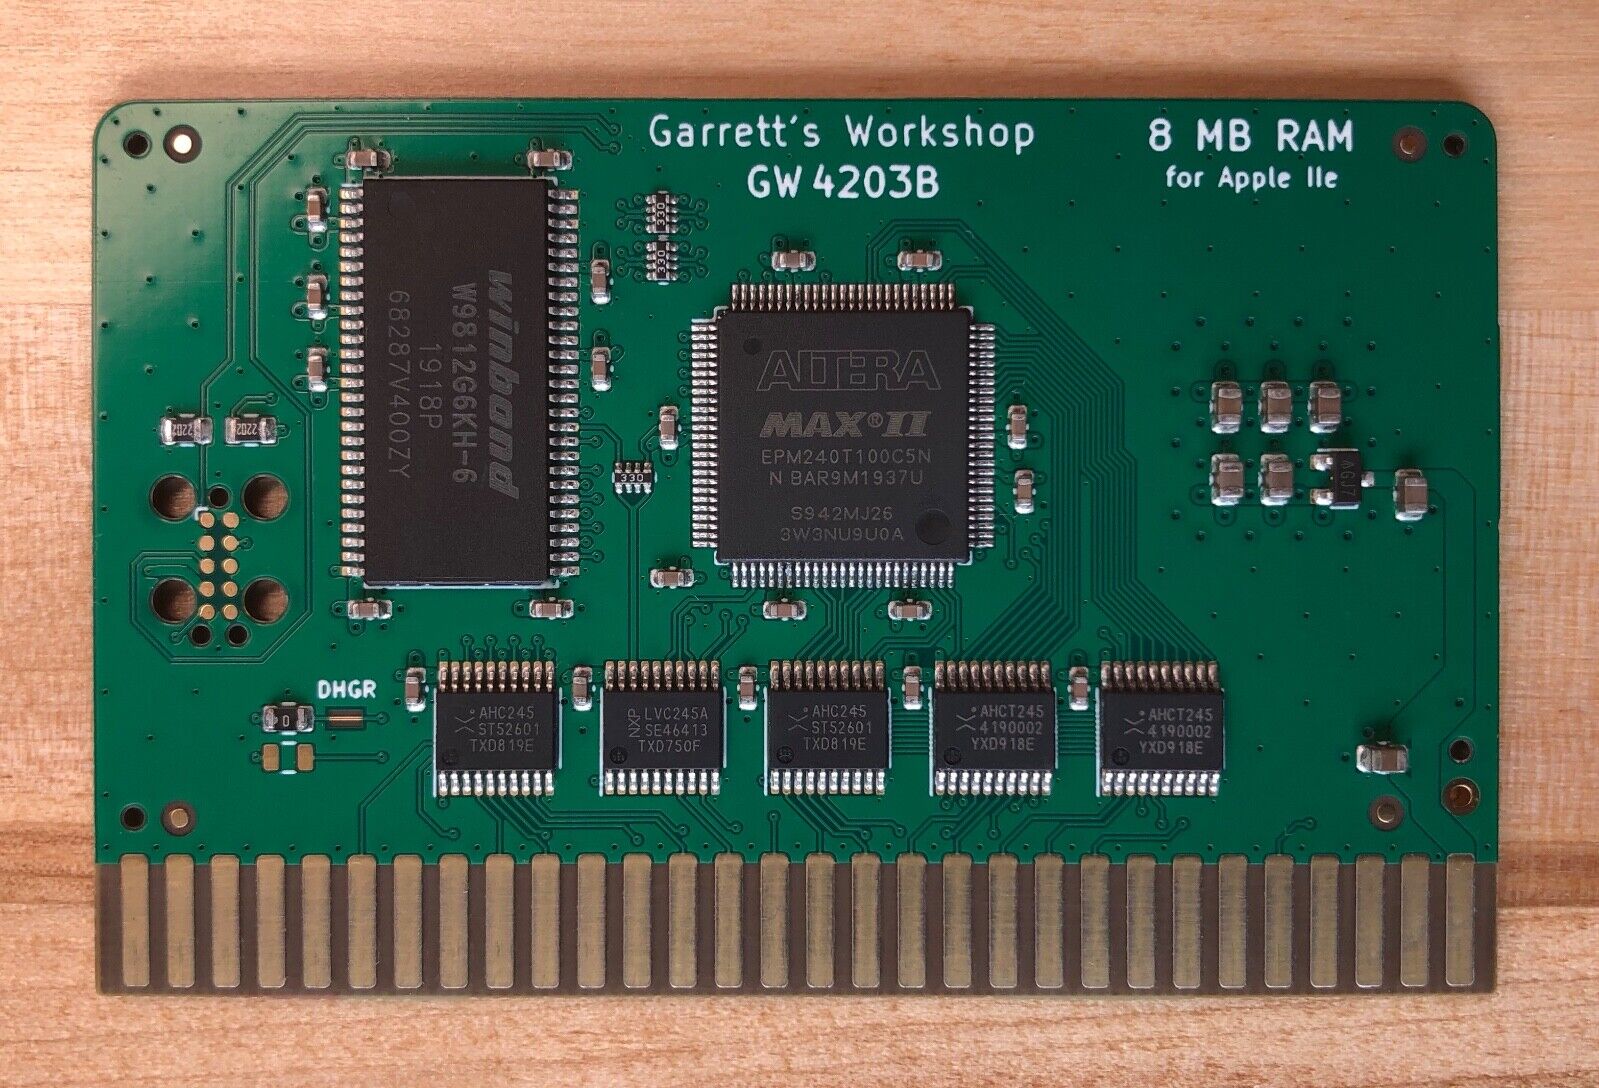 RAM2E II (GW4203B) -- 8MB RAM for Apple IIe ][e -- new 2024 production